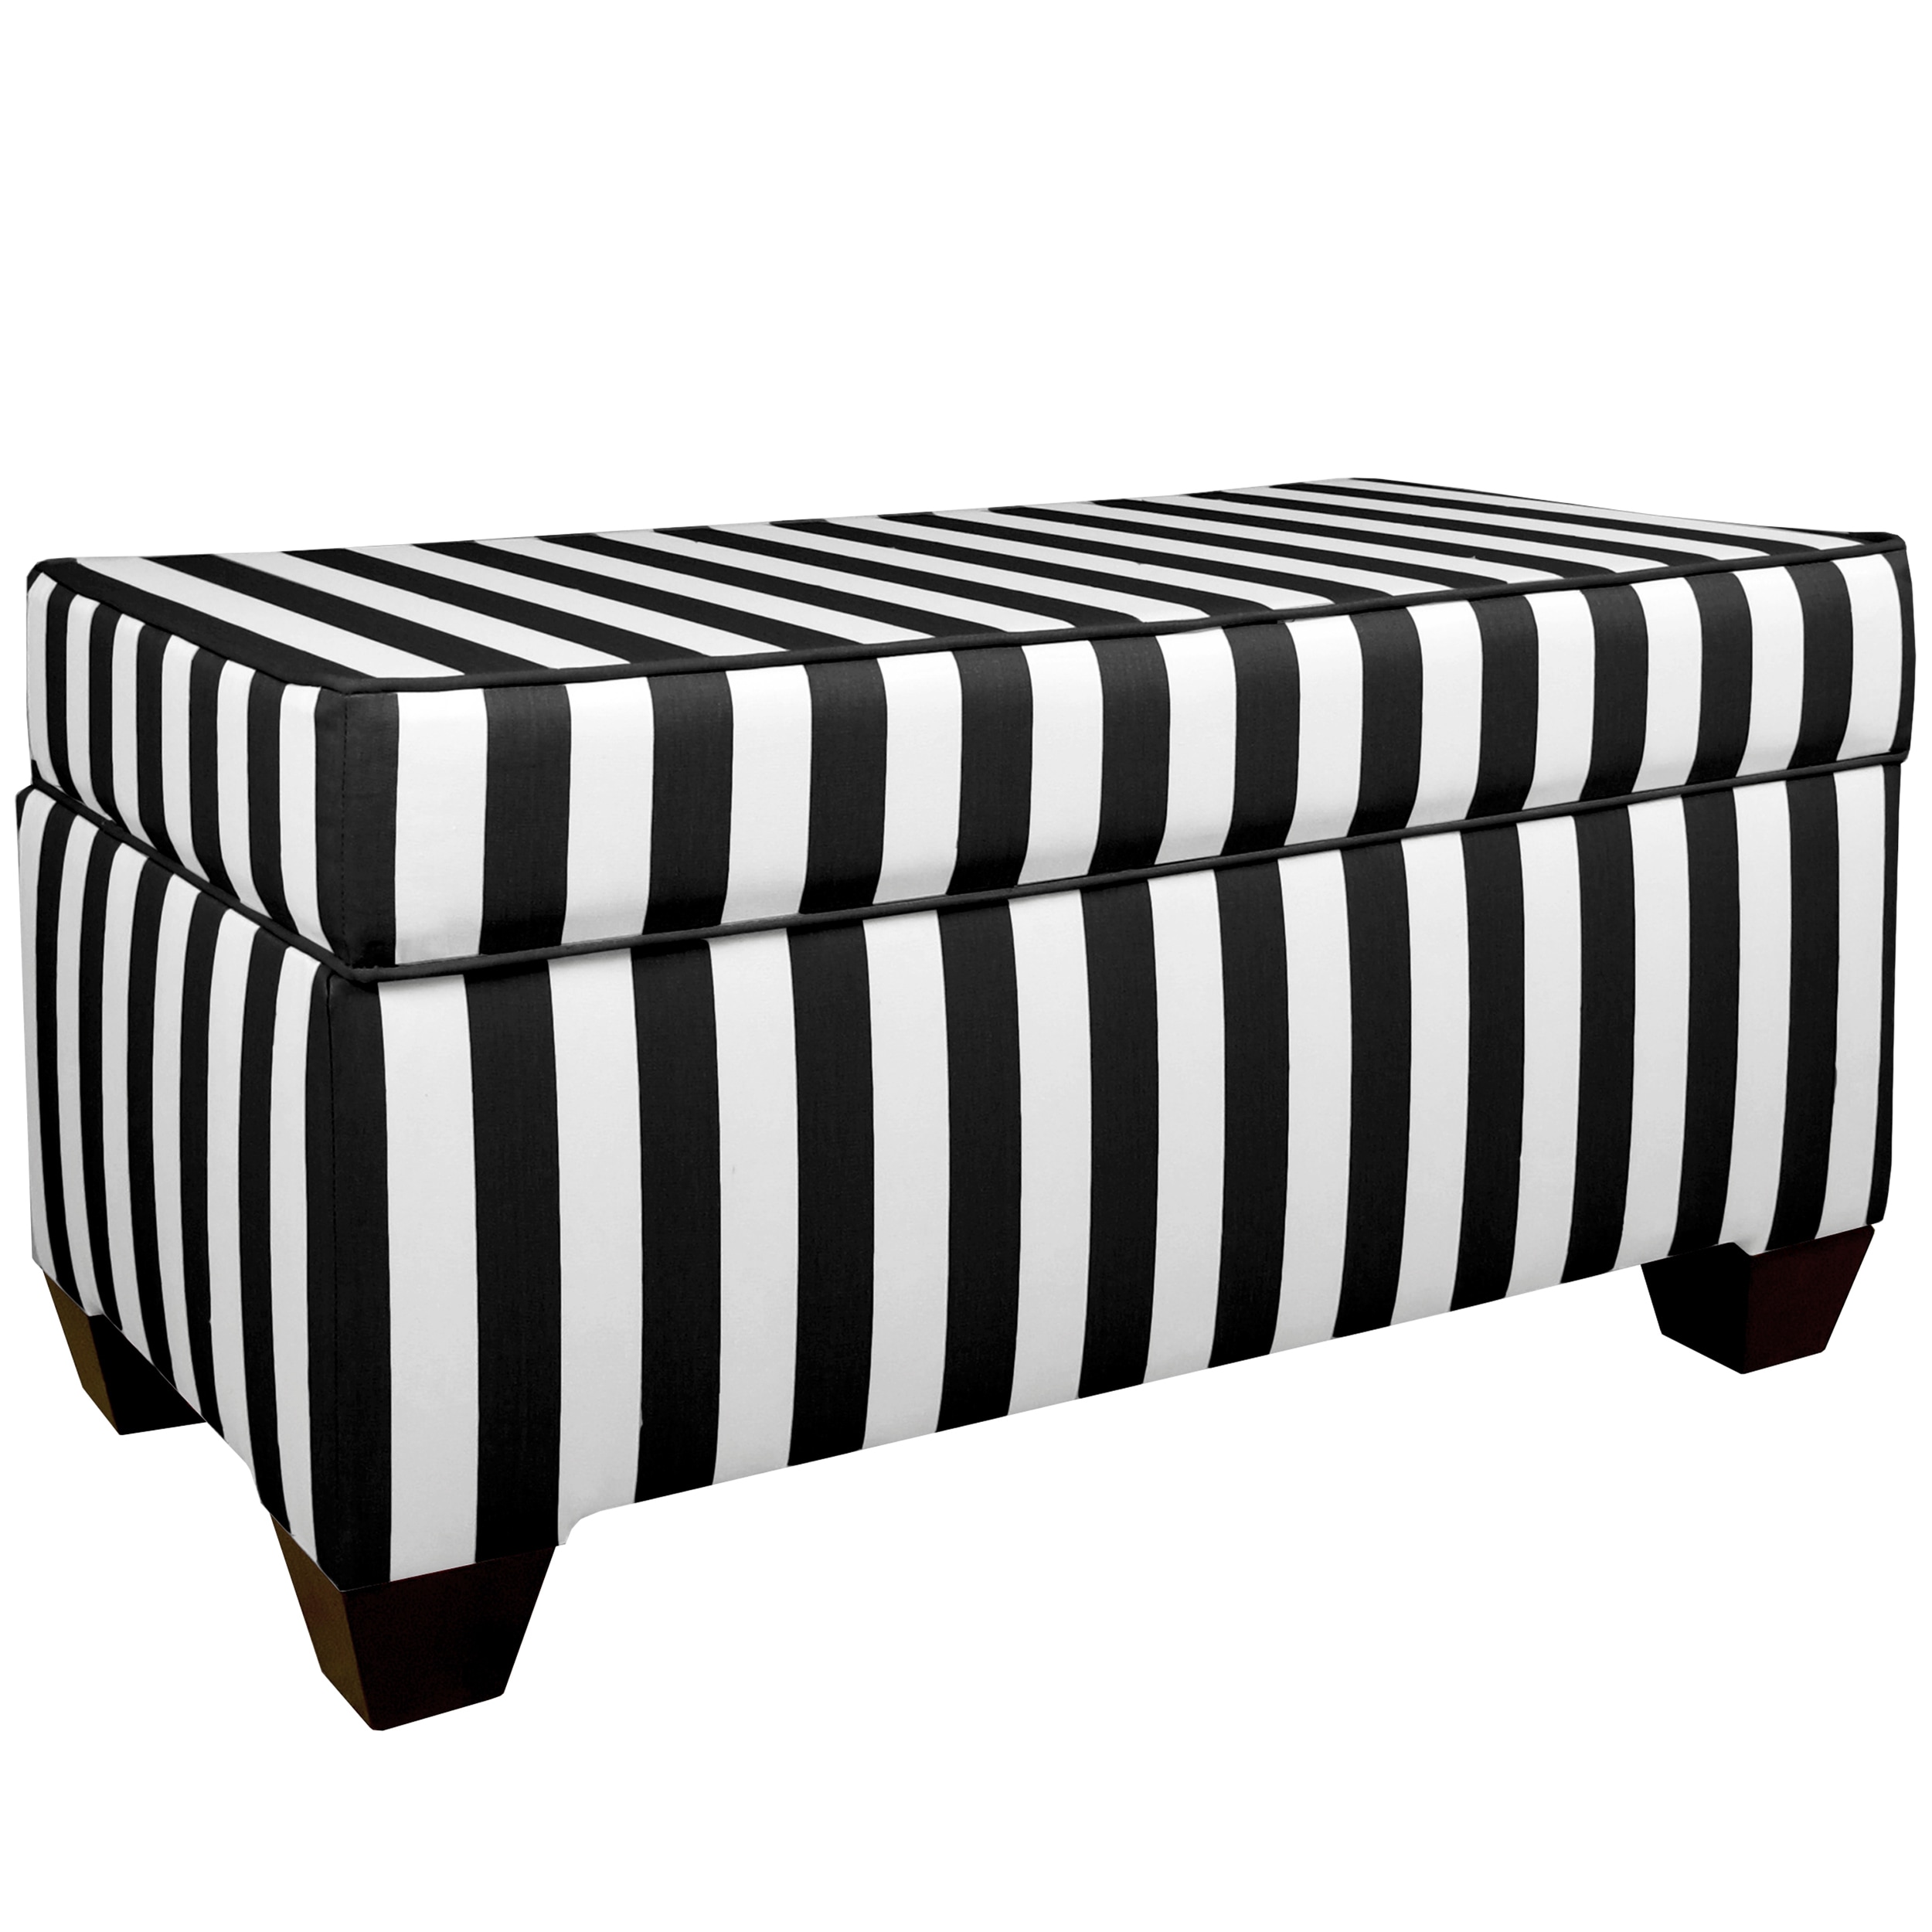 Skyline Furniture Canopy Stripe Black White Storage Bench Free